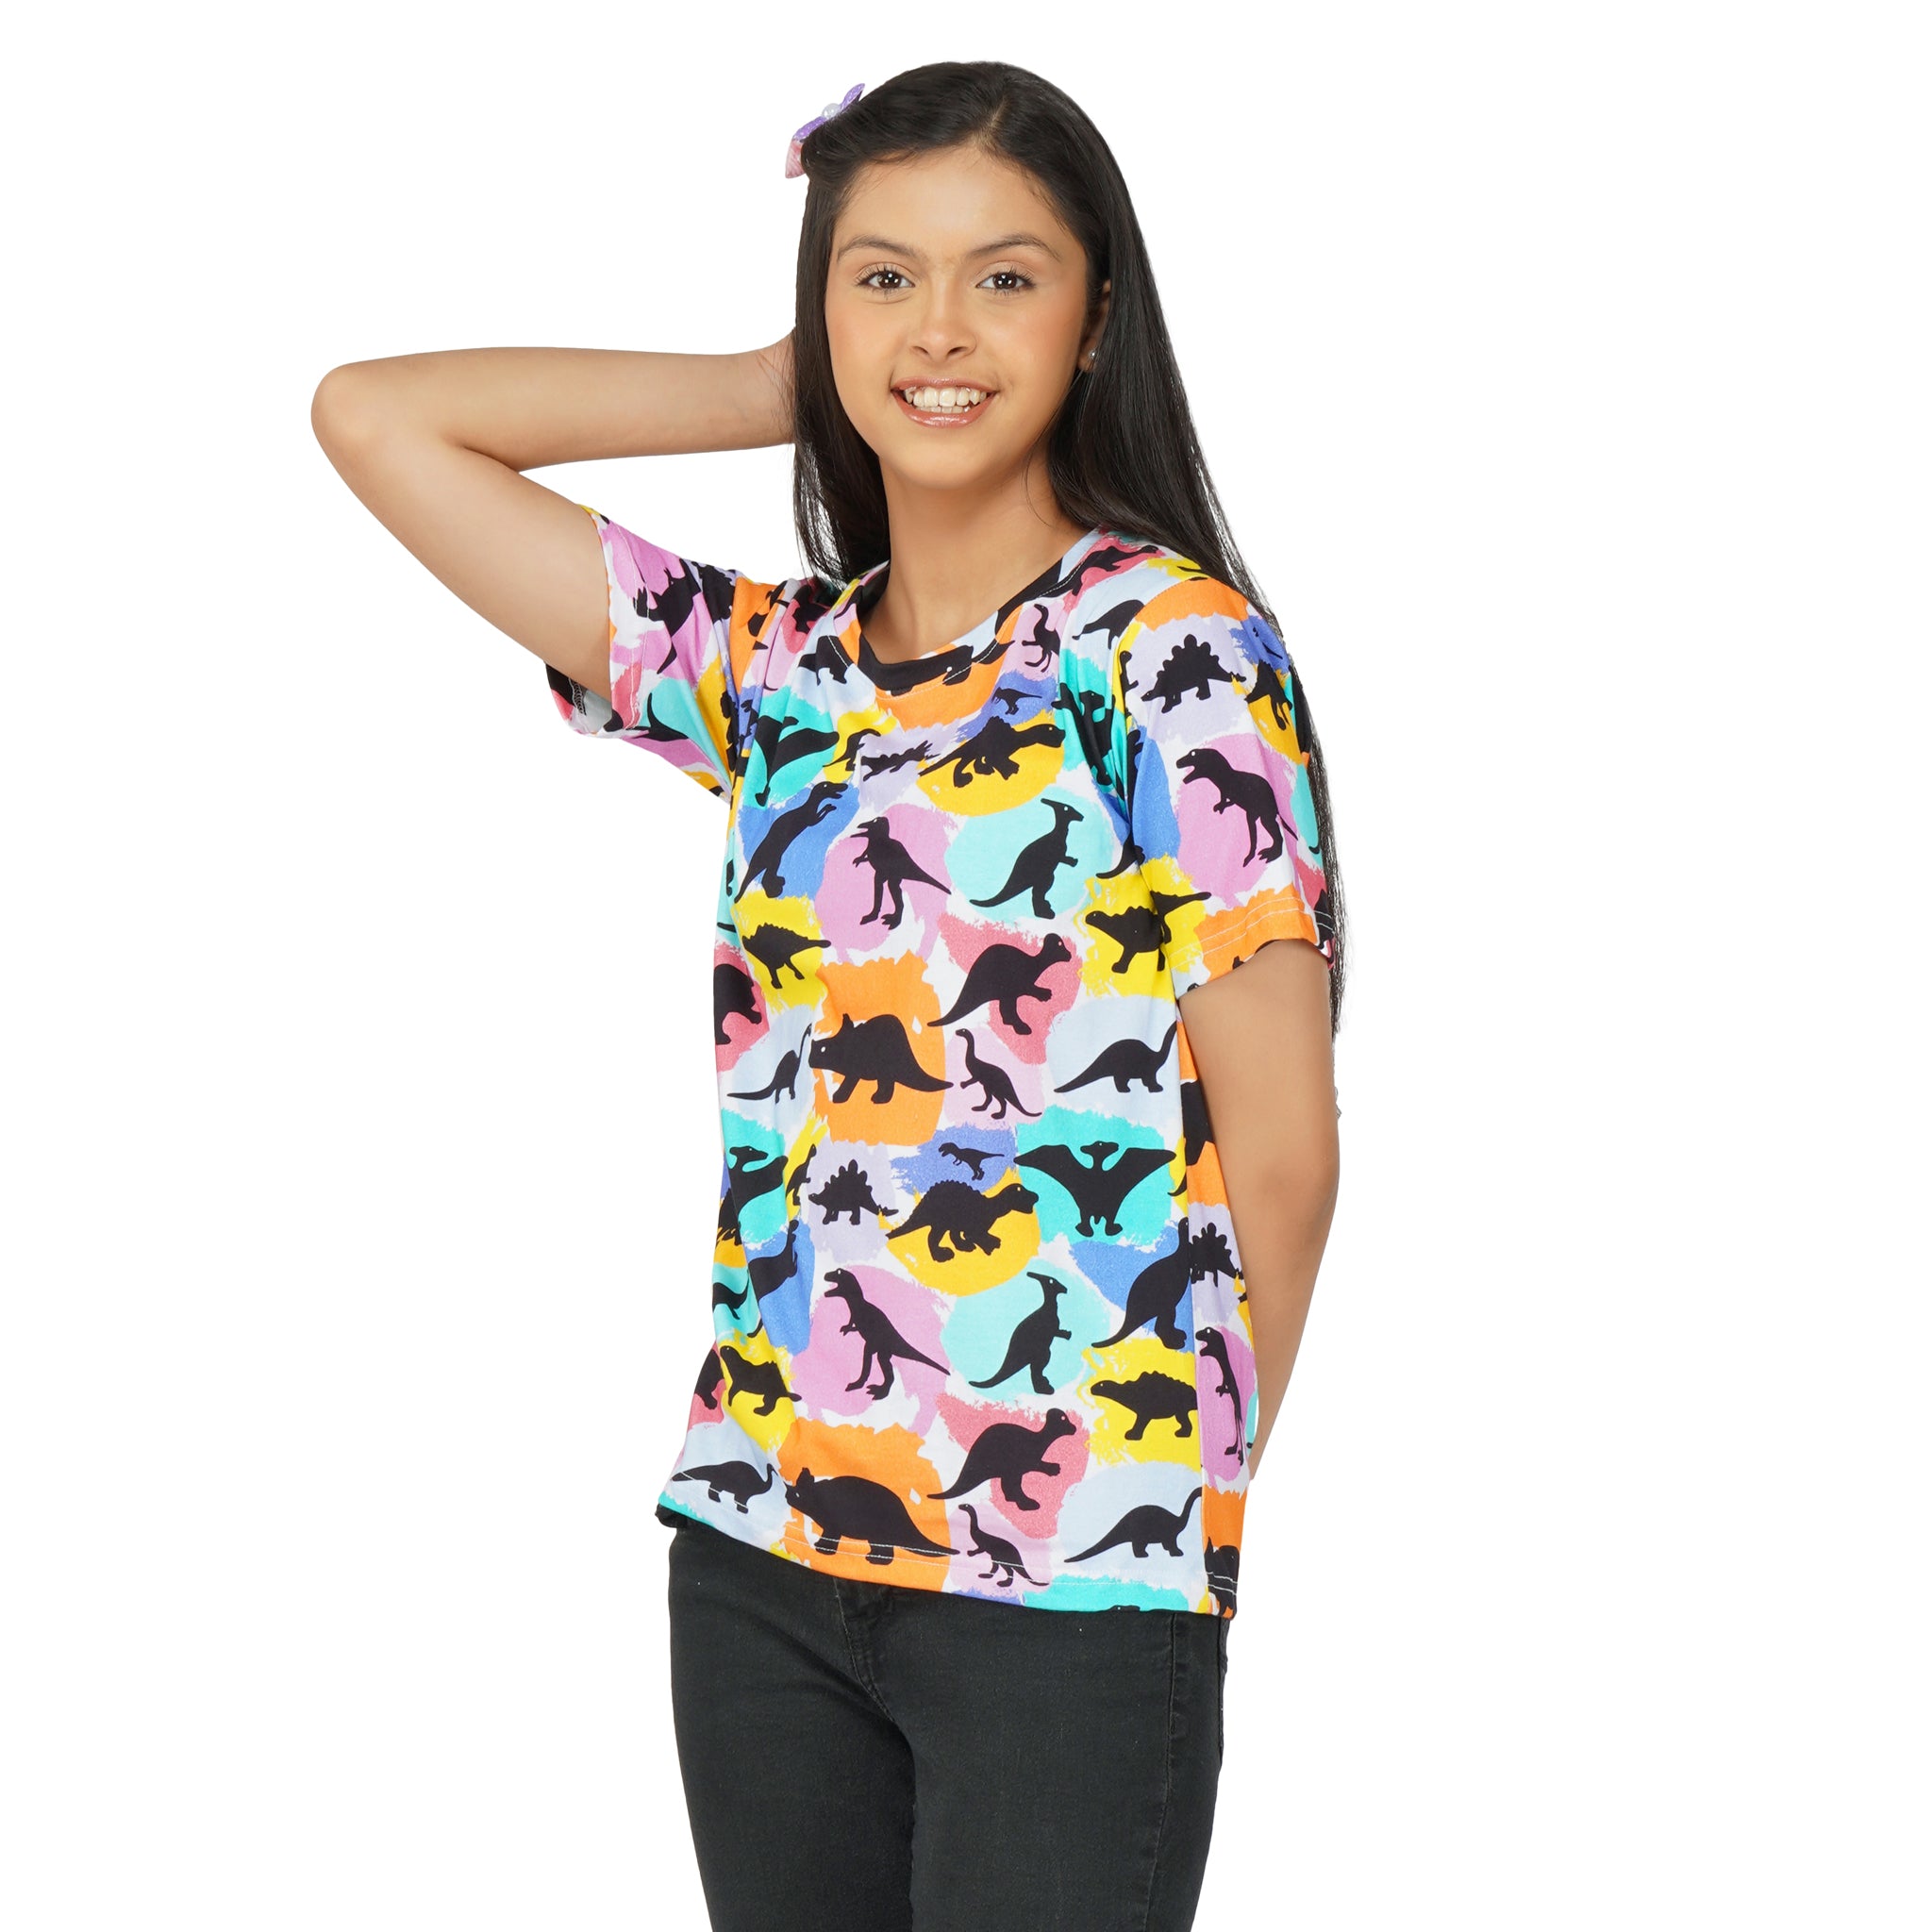 Dinosaurs & Colors Kids T-Shirt